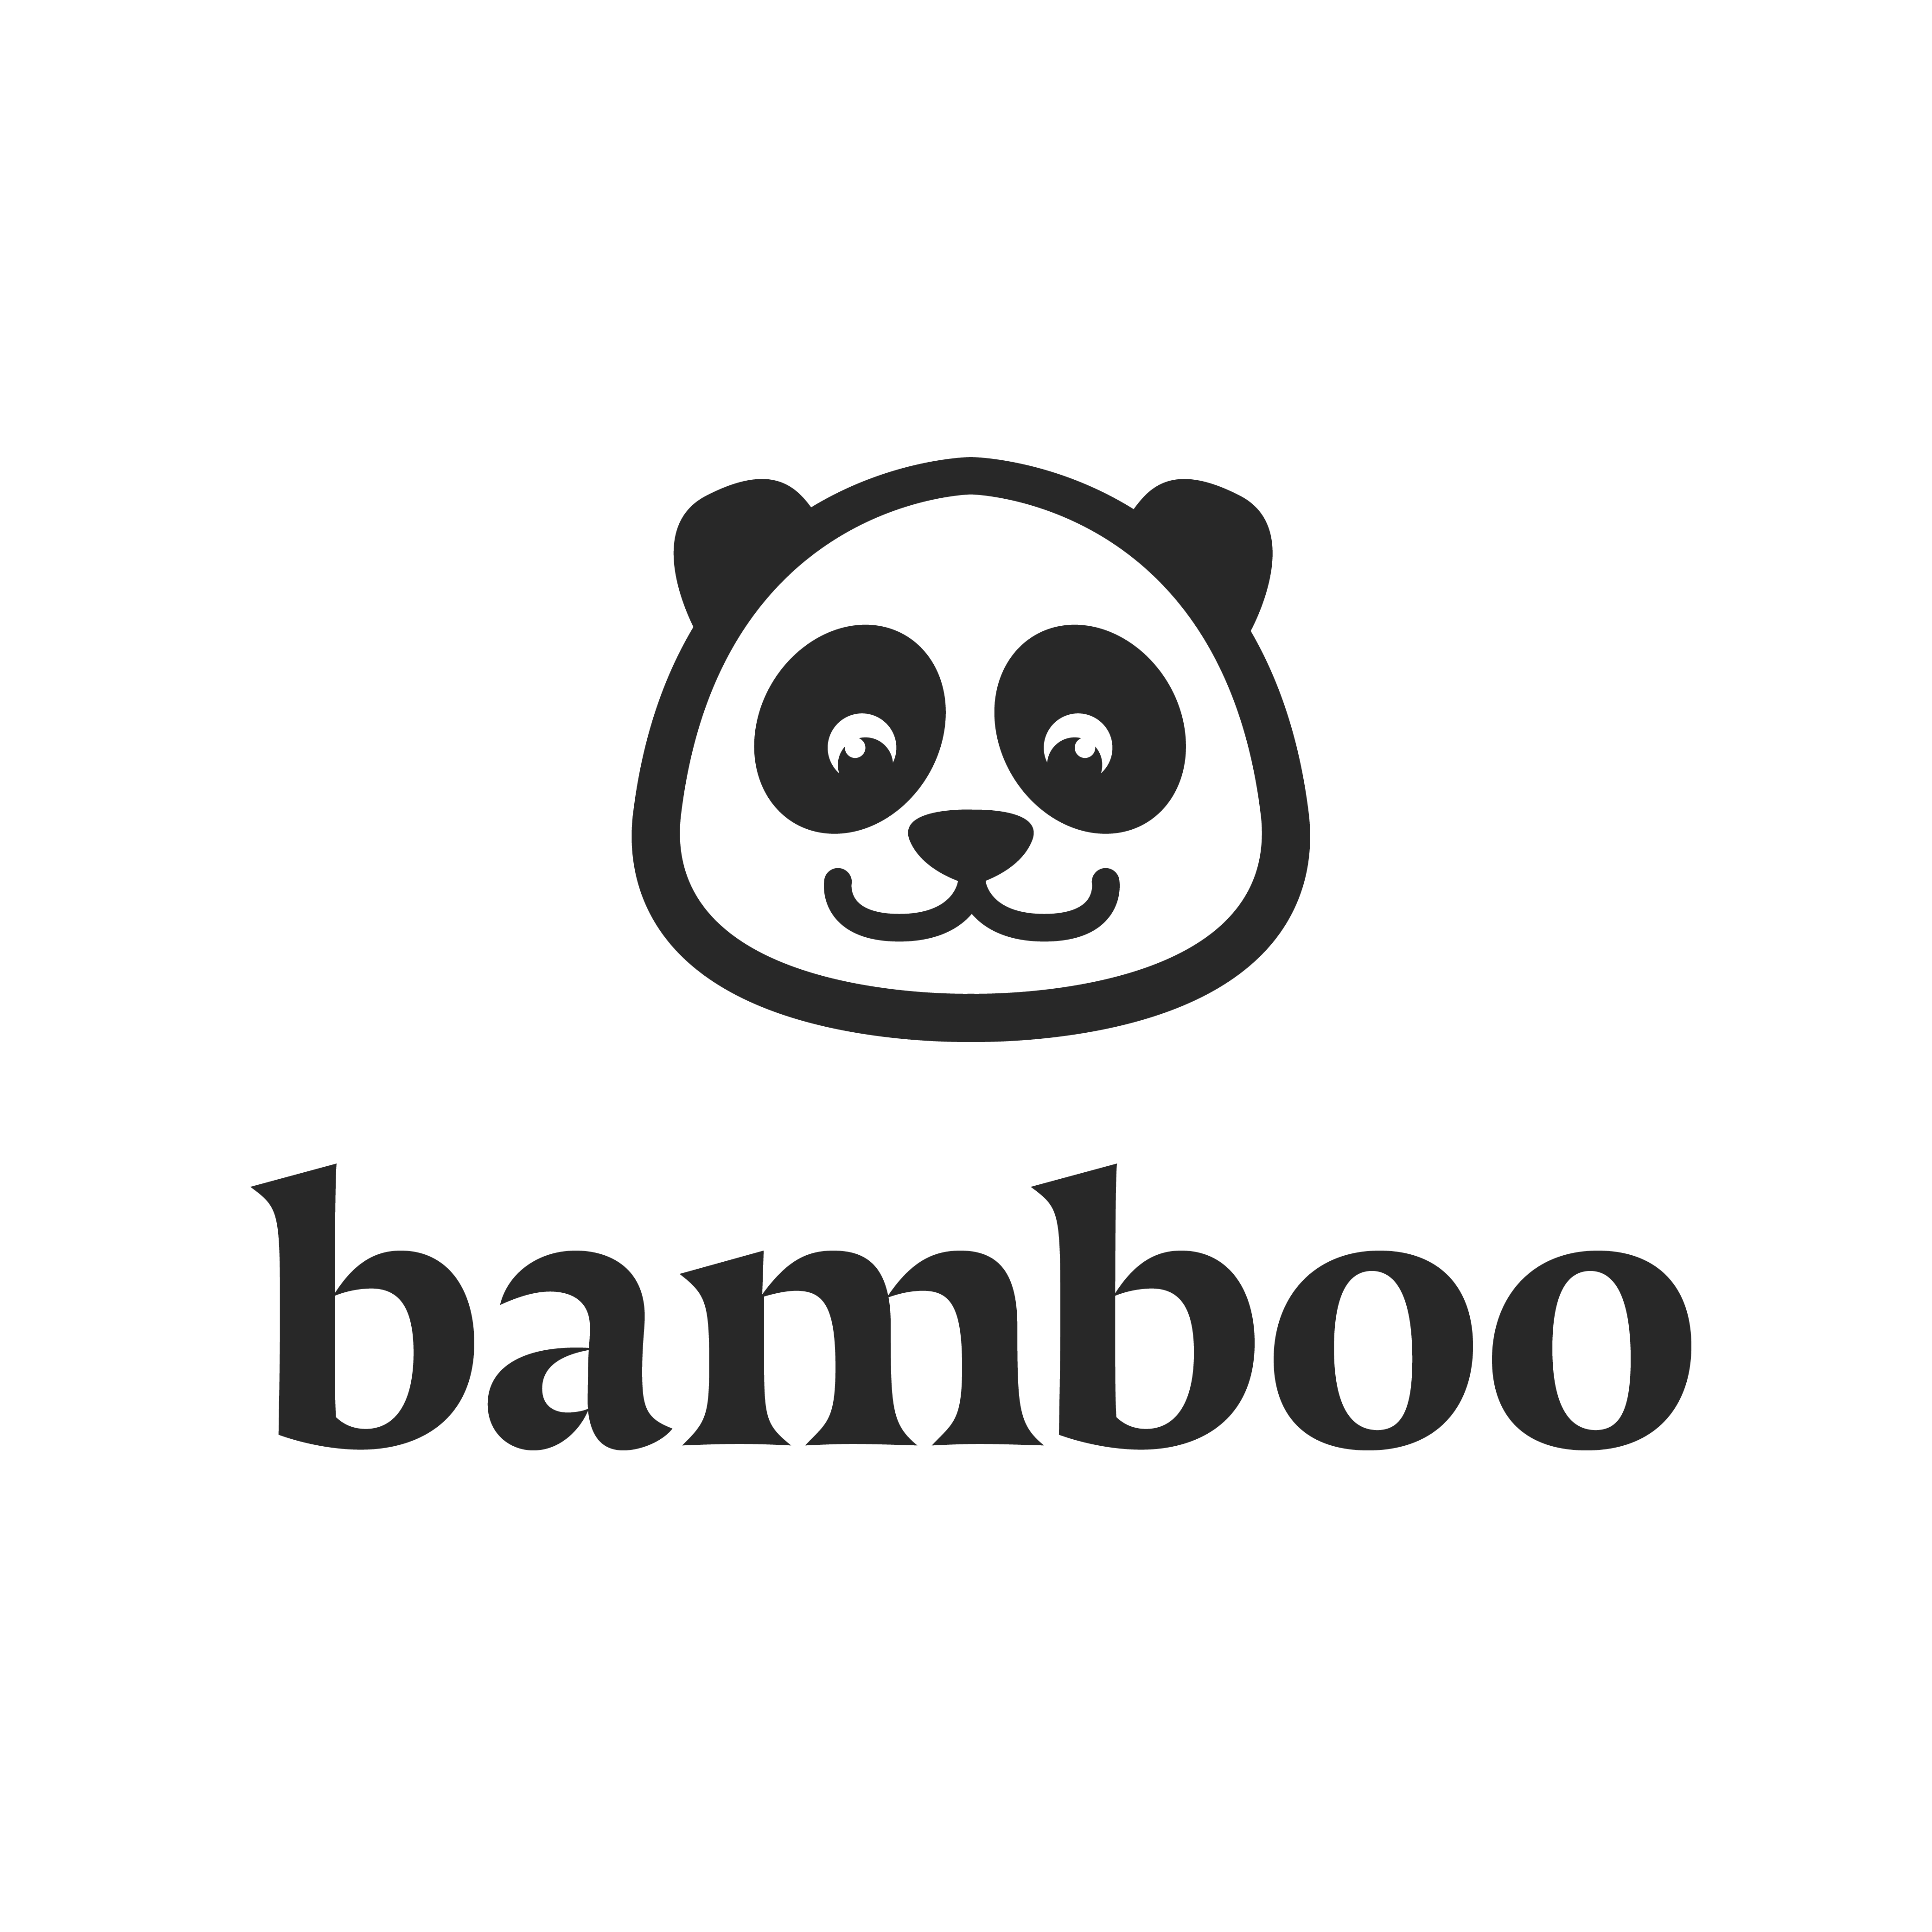 Bamboo - Reviews, News and Ratings